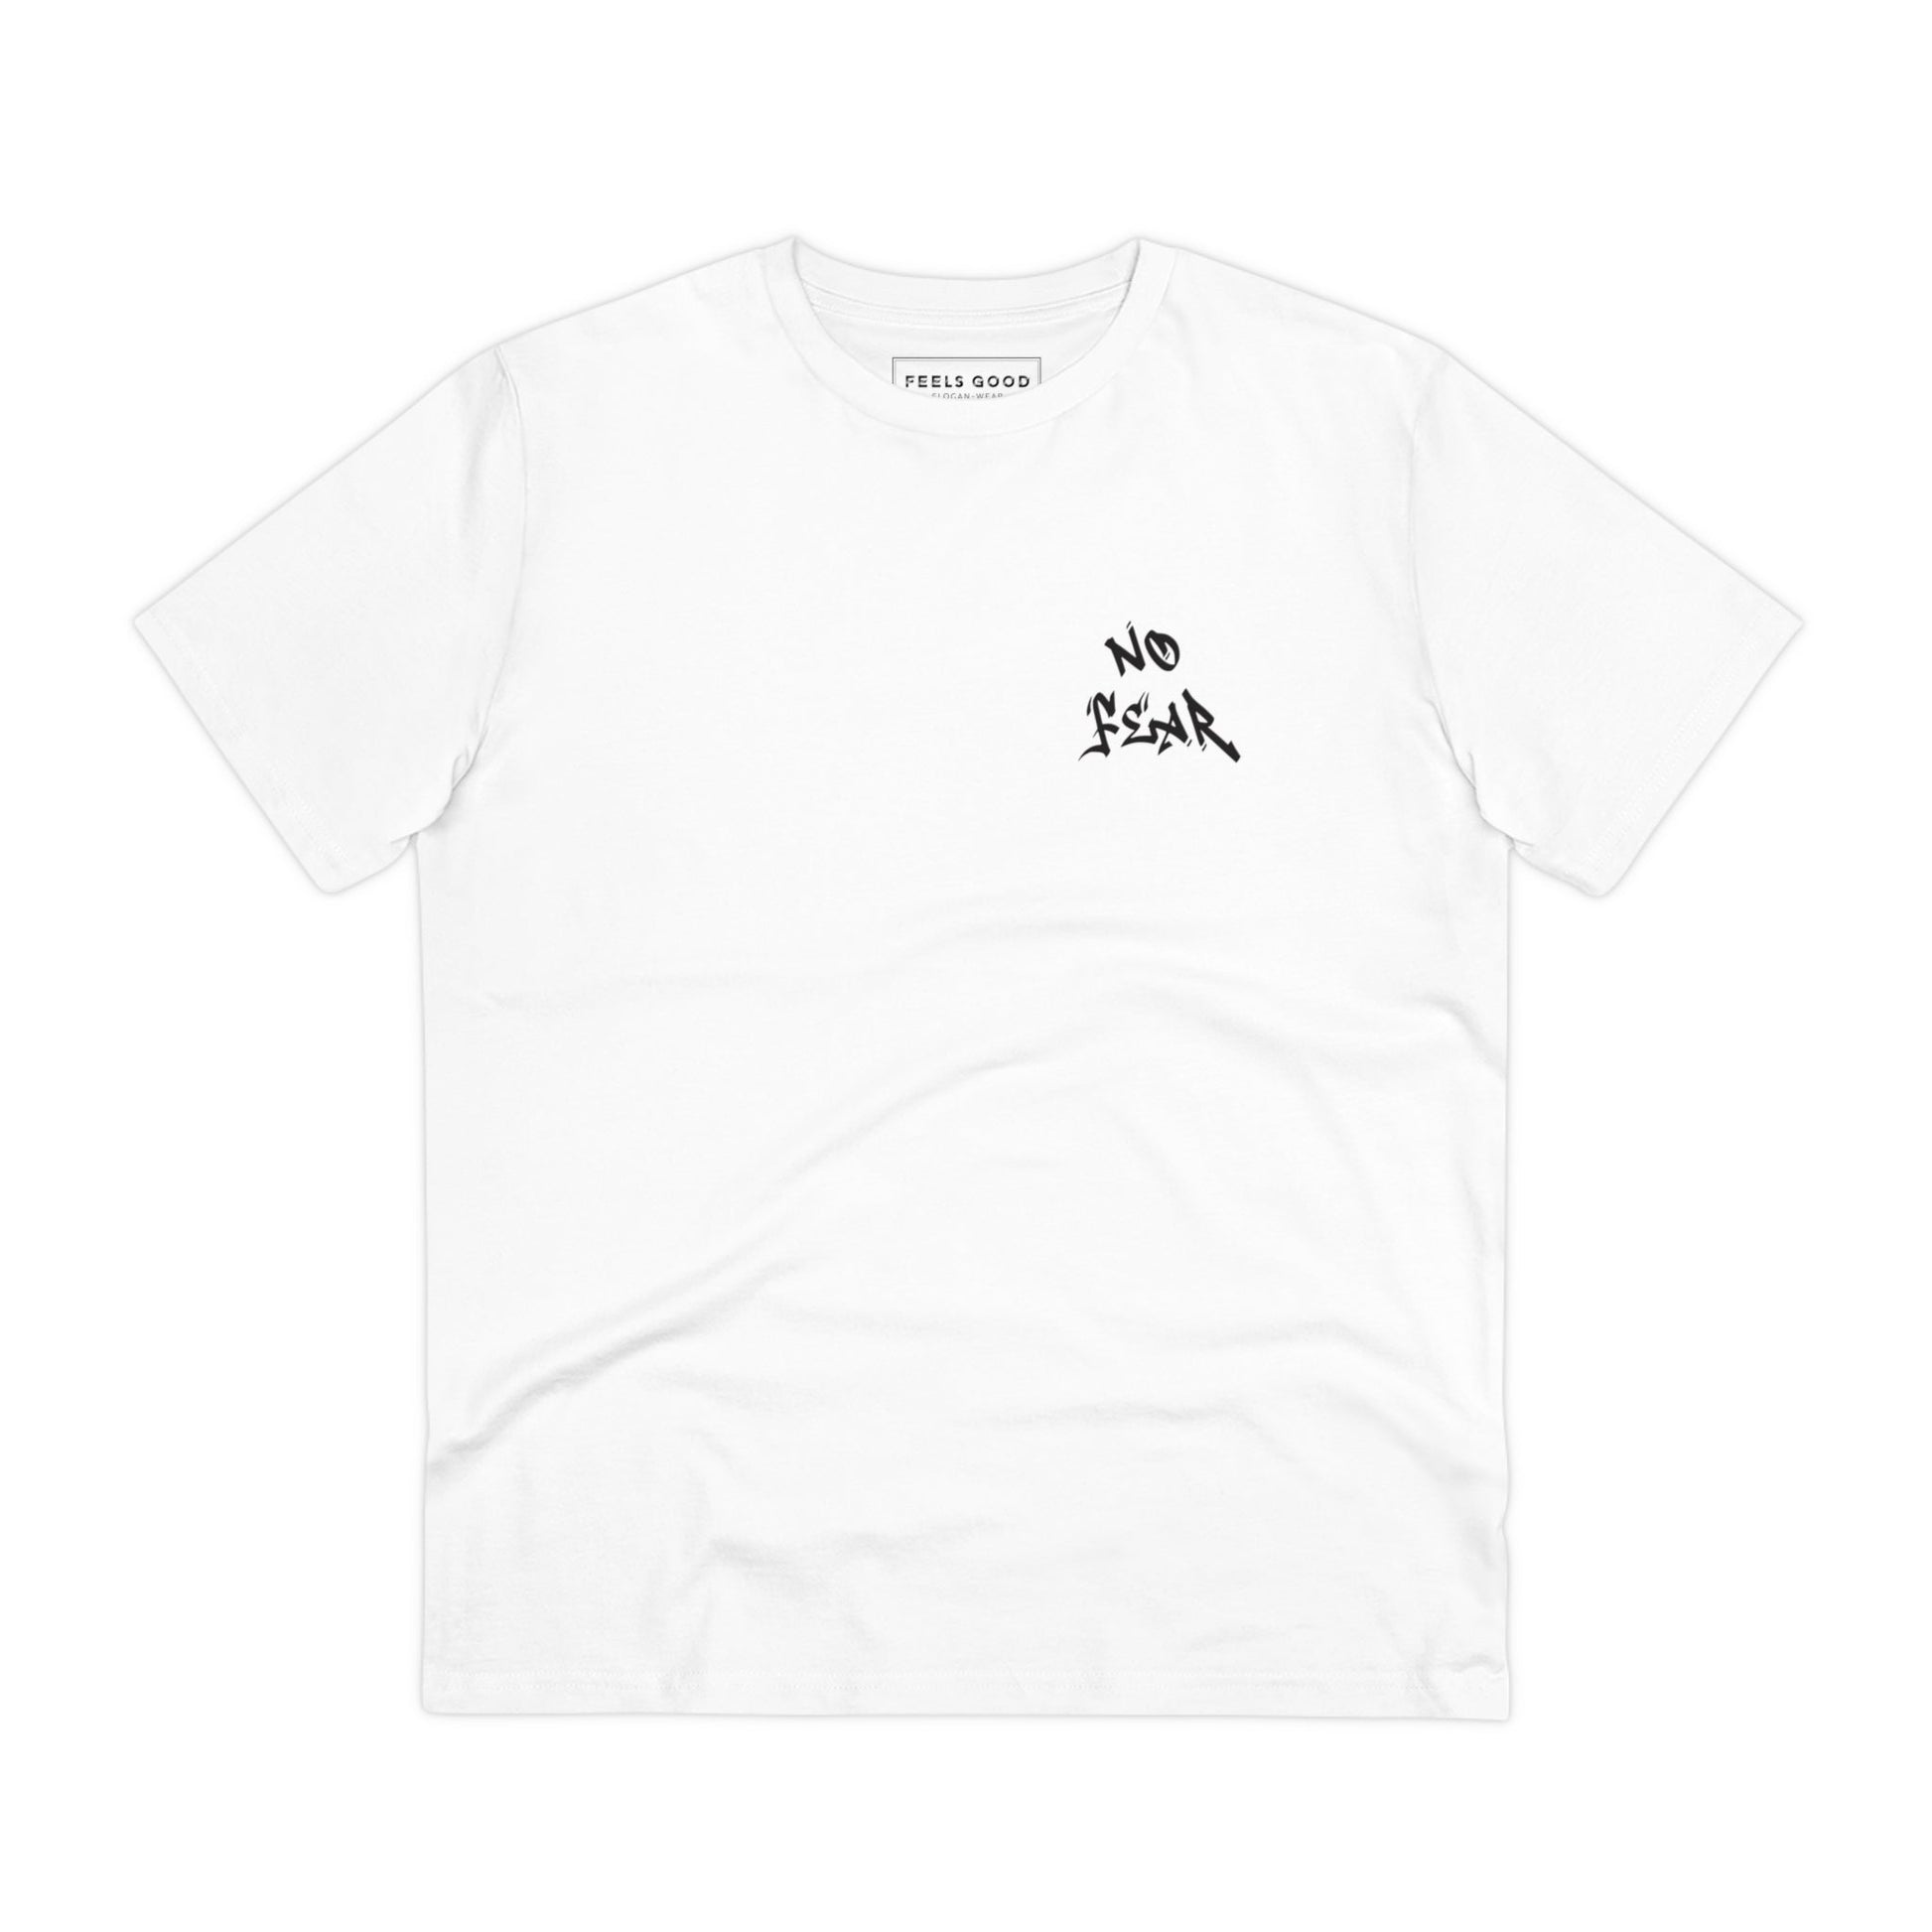 Hip Hop 'No Fear' Organic Cotton T-shirt - No Fear Tshirt